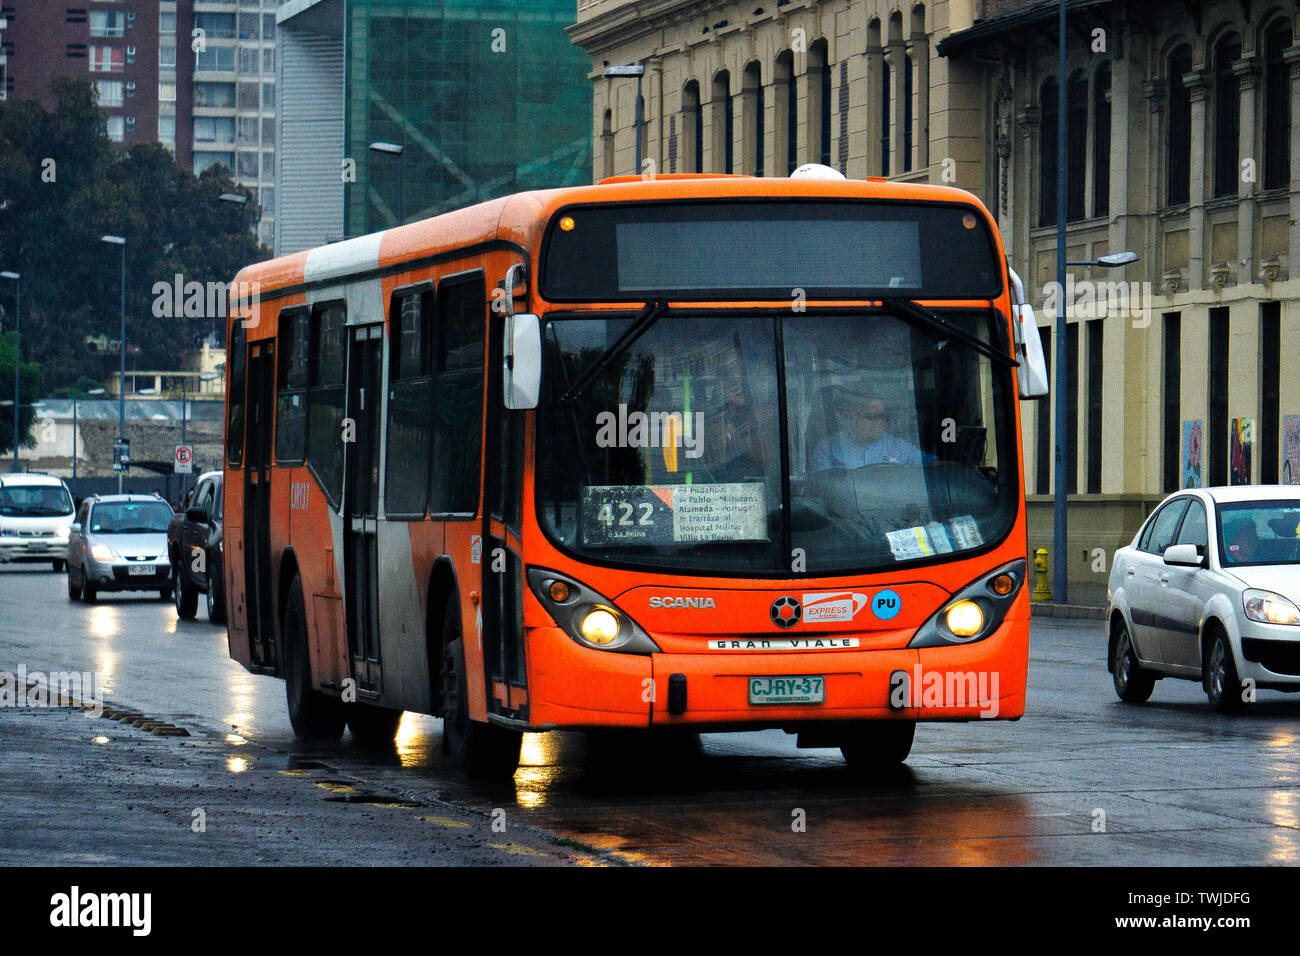 SANTIAGO, CHILE - APRIL 2016: A Transantiago bus during a rainy day Stock Photo